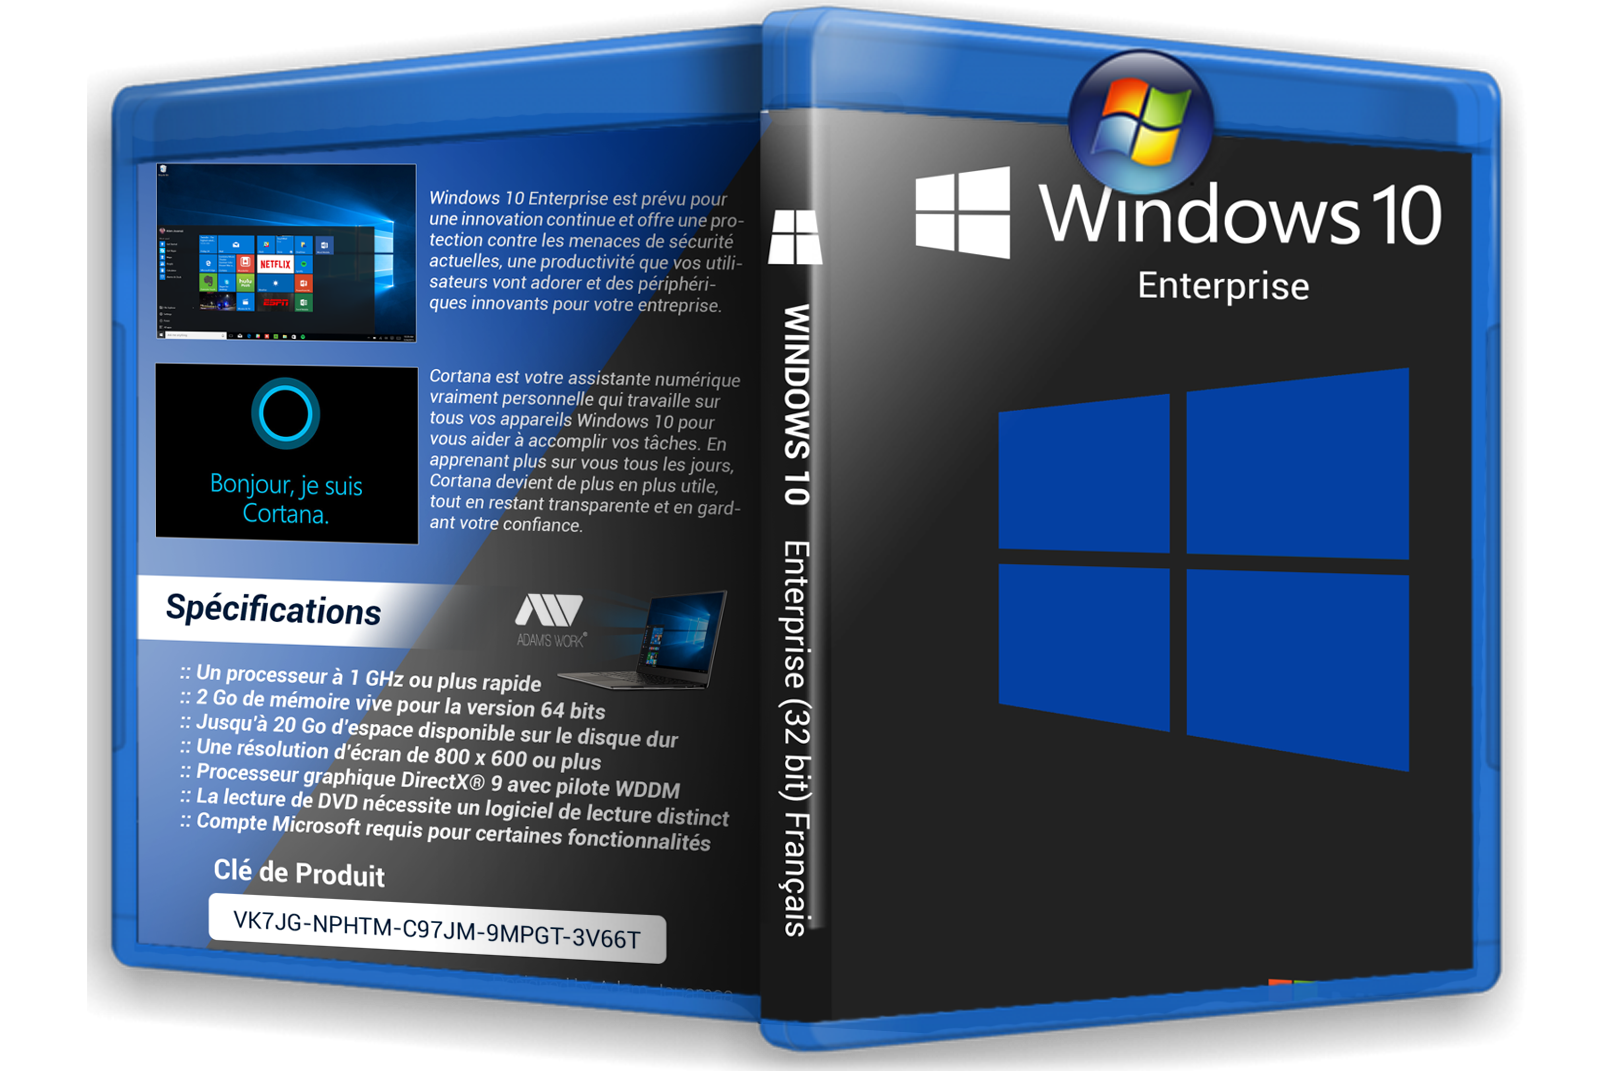 download windows 10 enterprise 1803 iso 64 bit